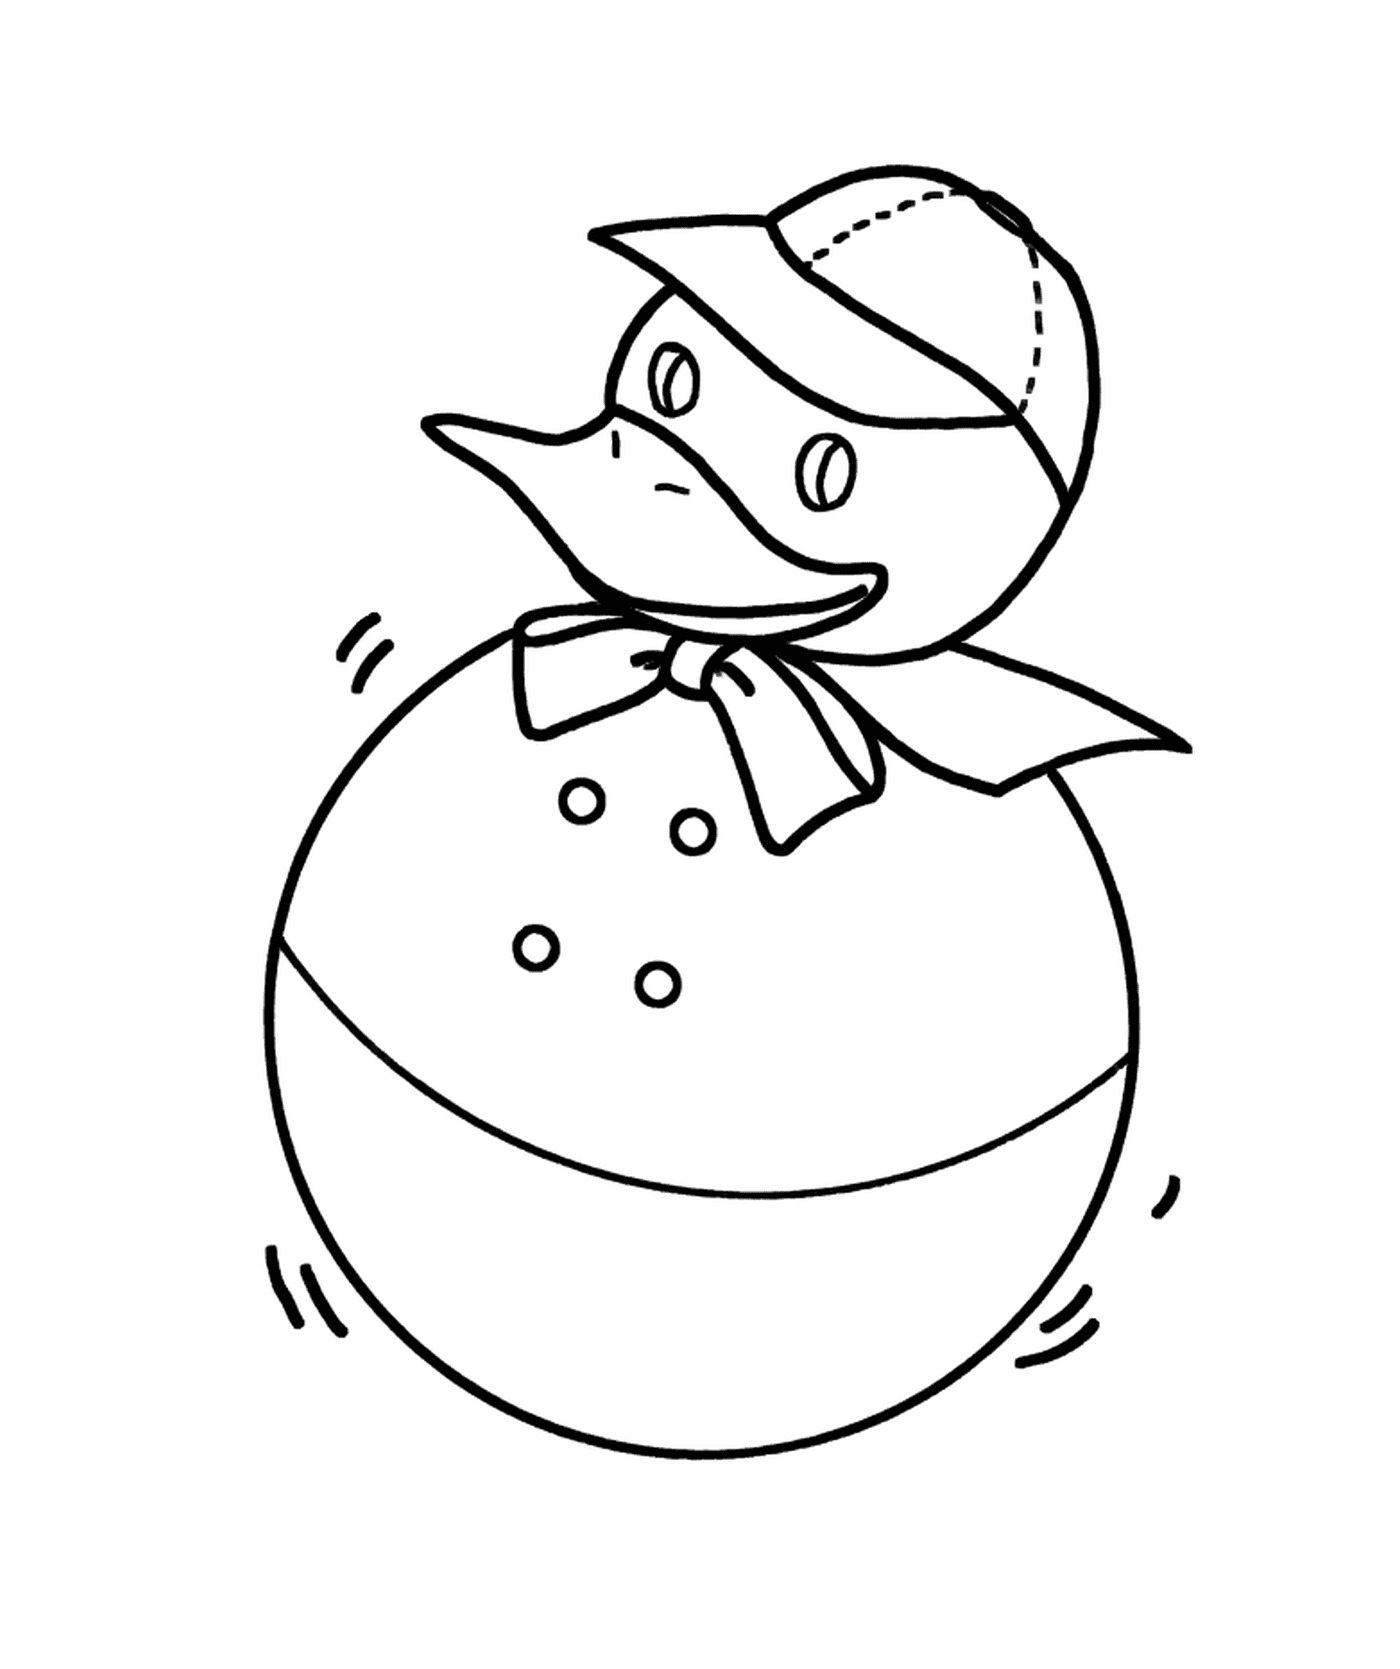  Un pato de goma con sombrero 